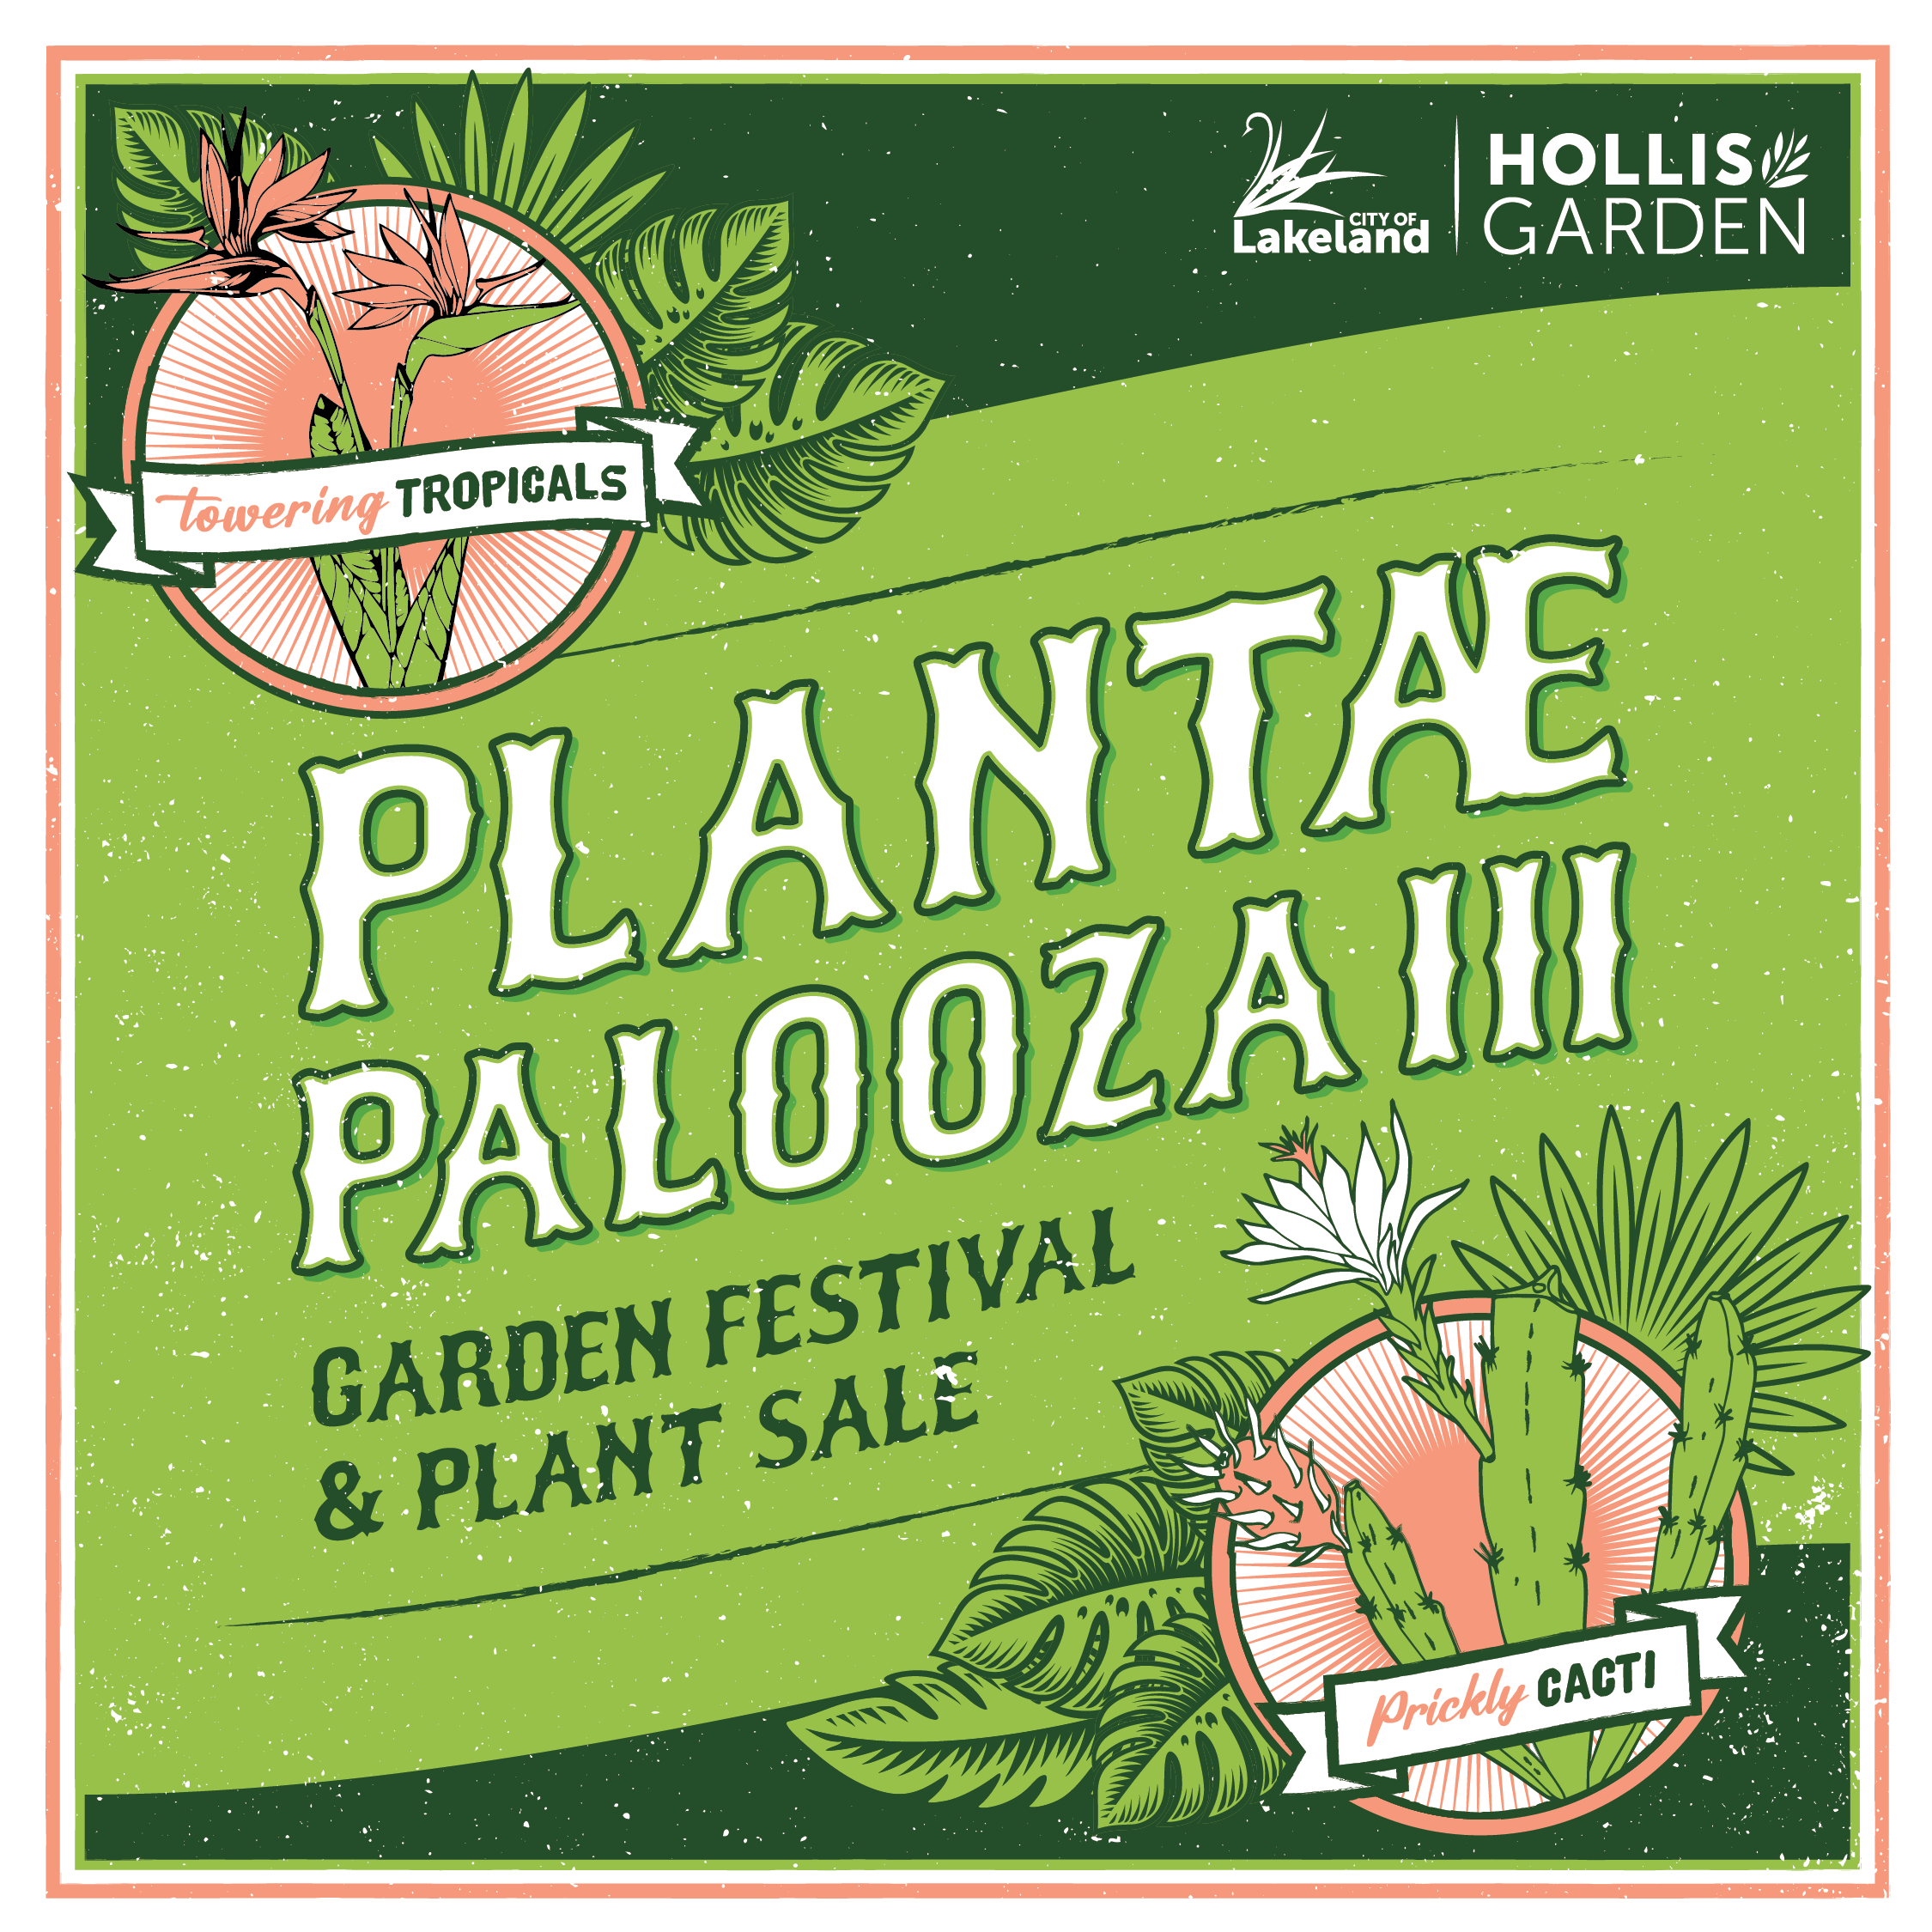 Plantae Palooza decorative event graphic